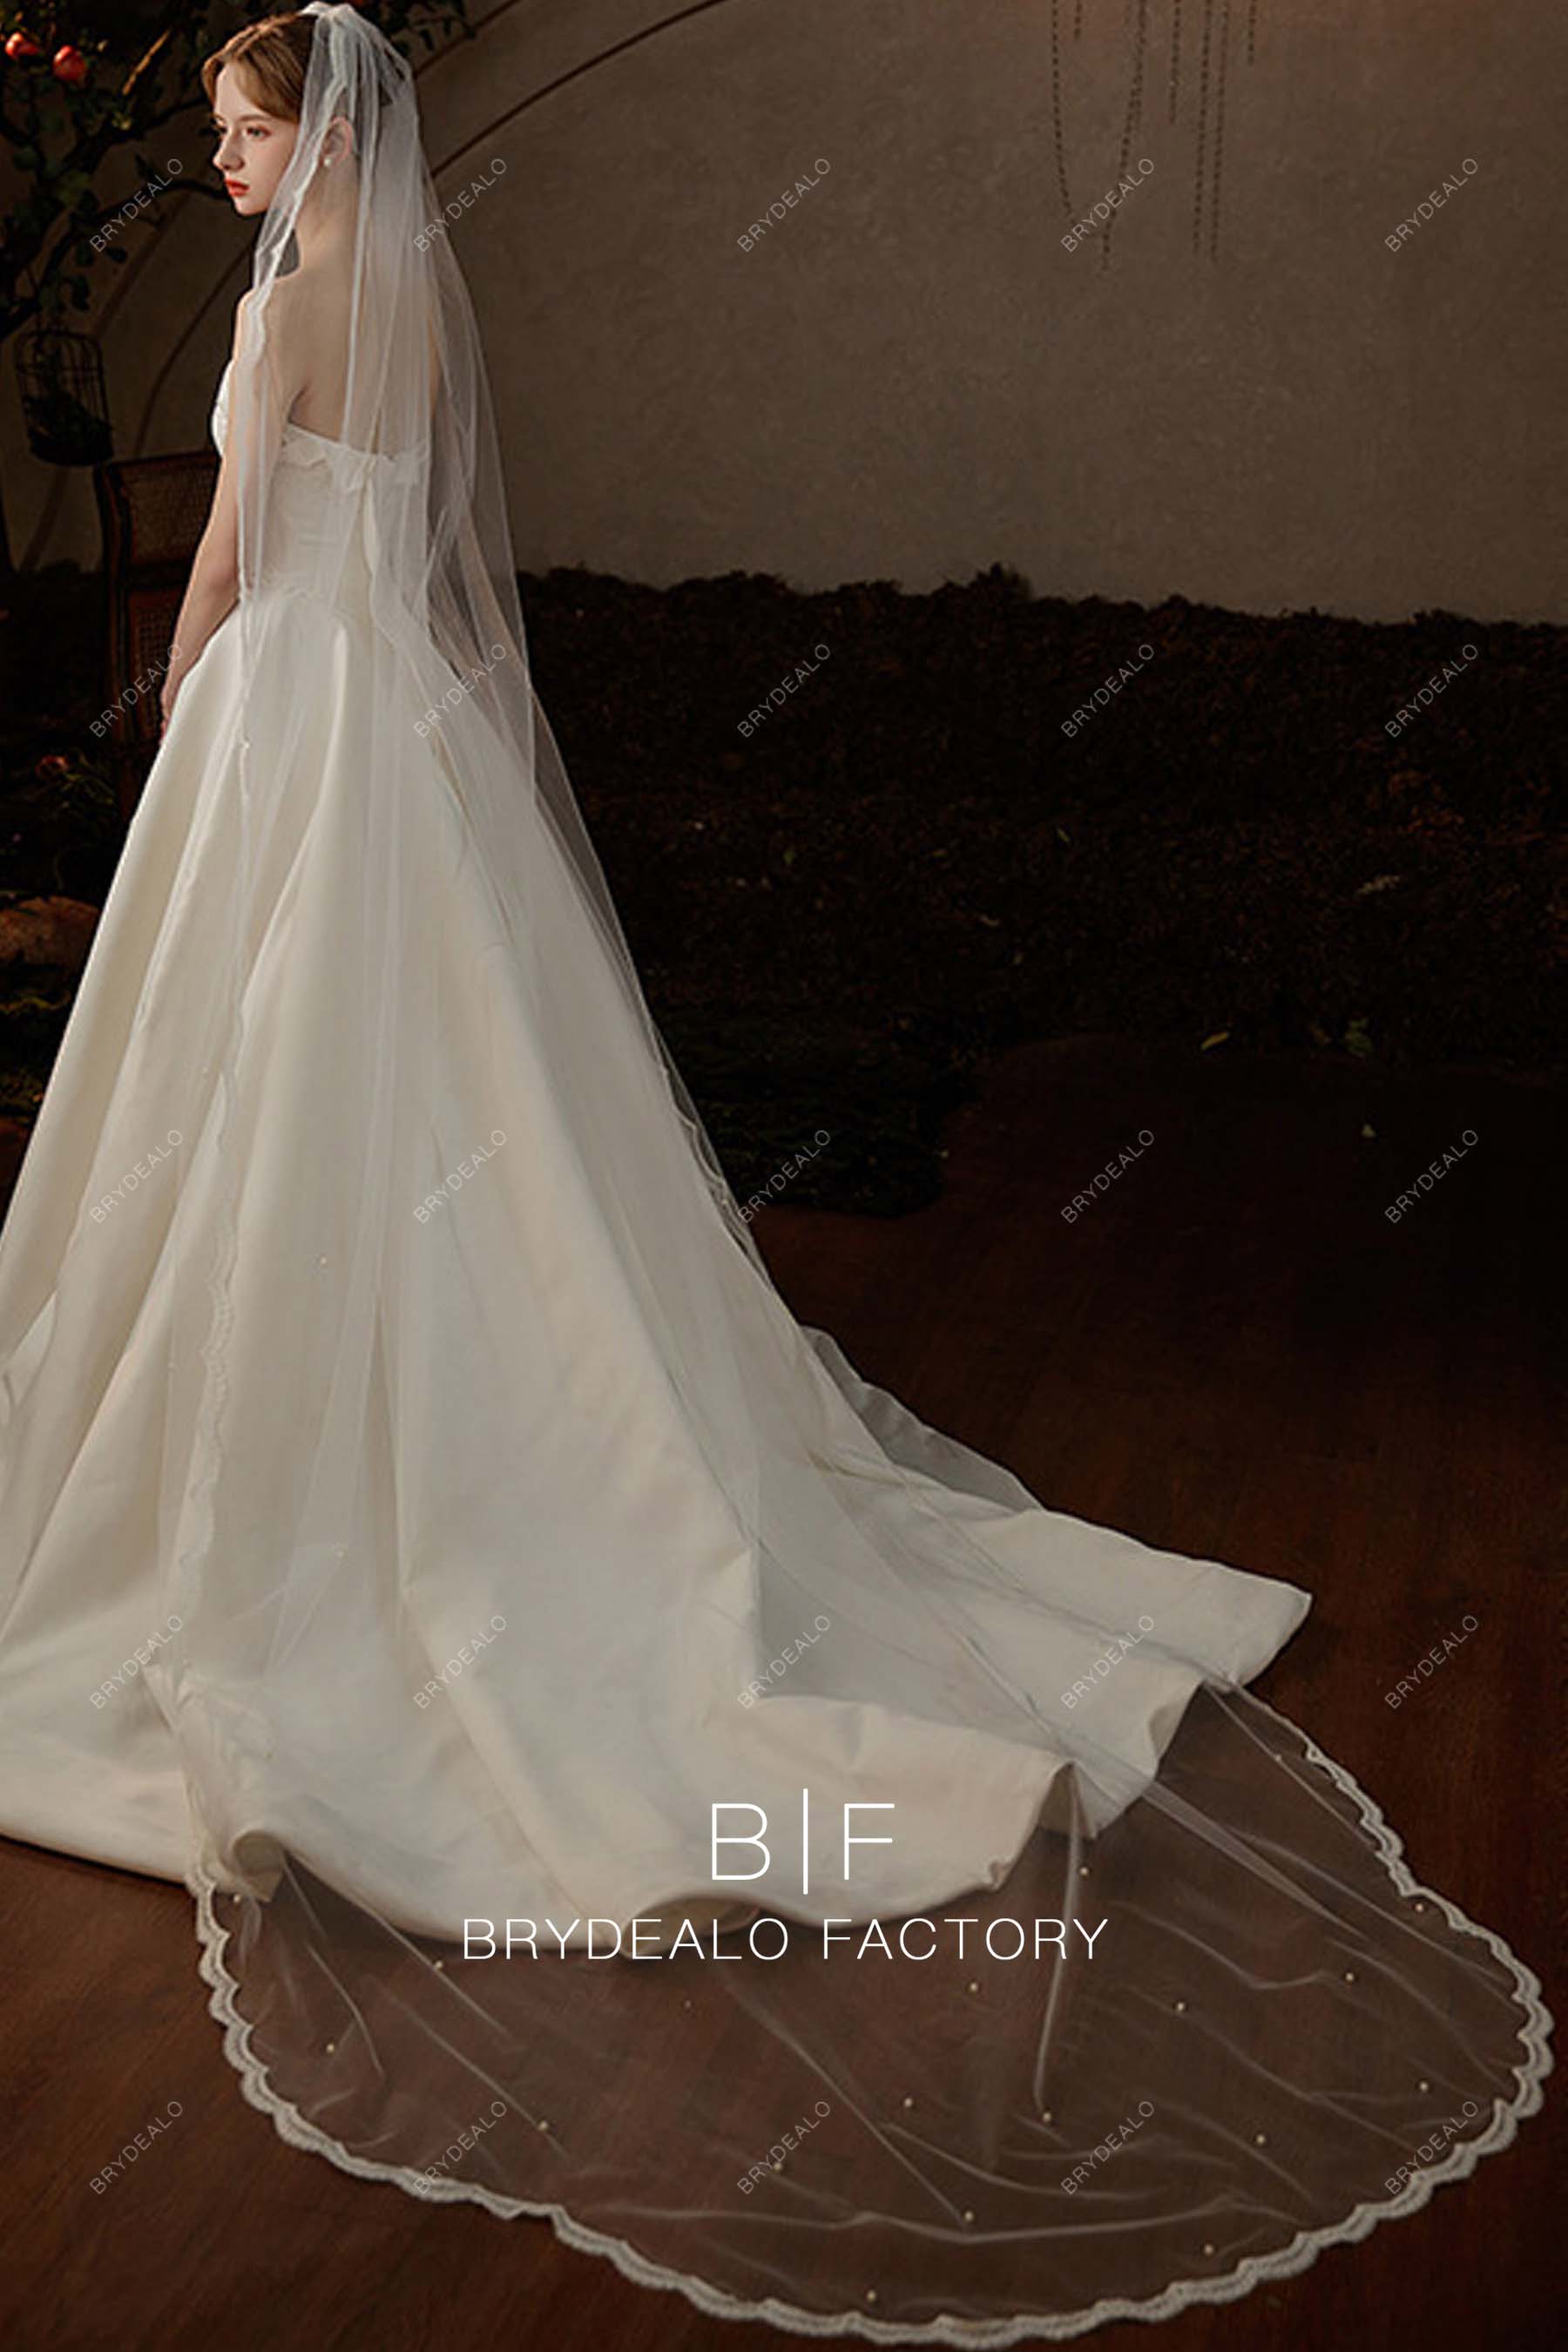 Champaign Bridal Veil 2 Tier Floor/Chapel Satin Edge Pearls 28/78 UK